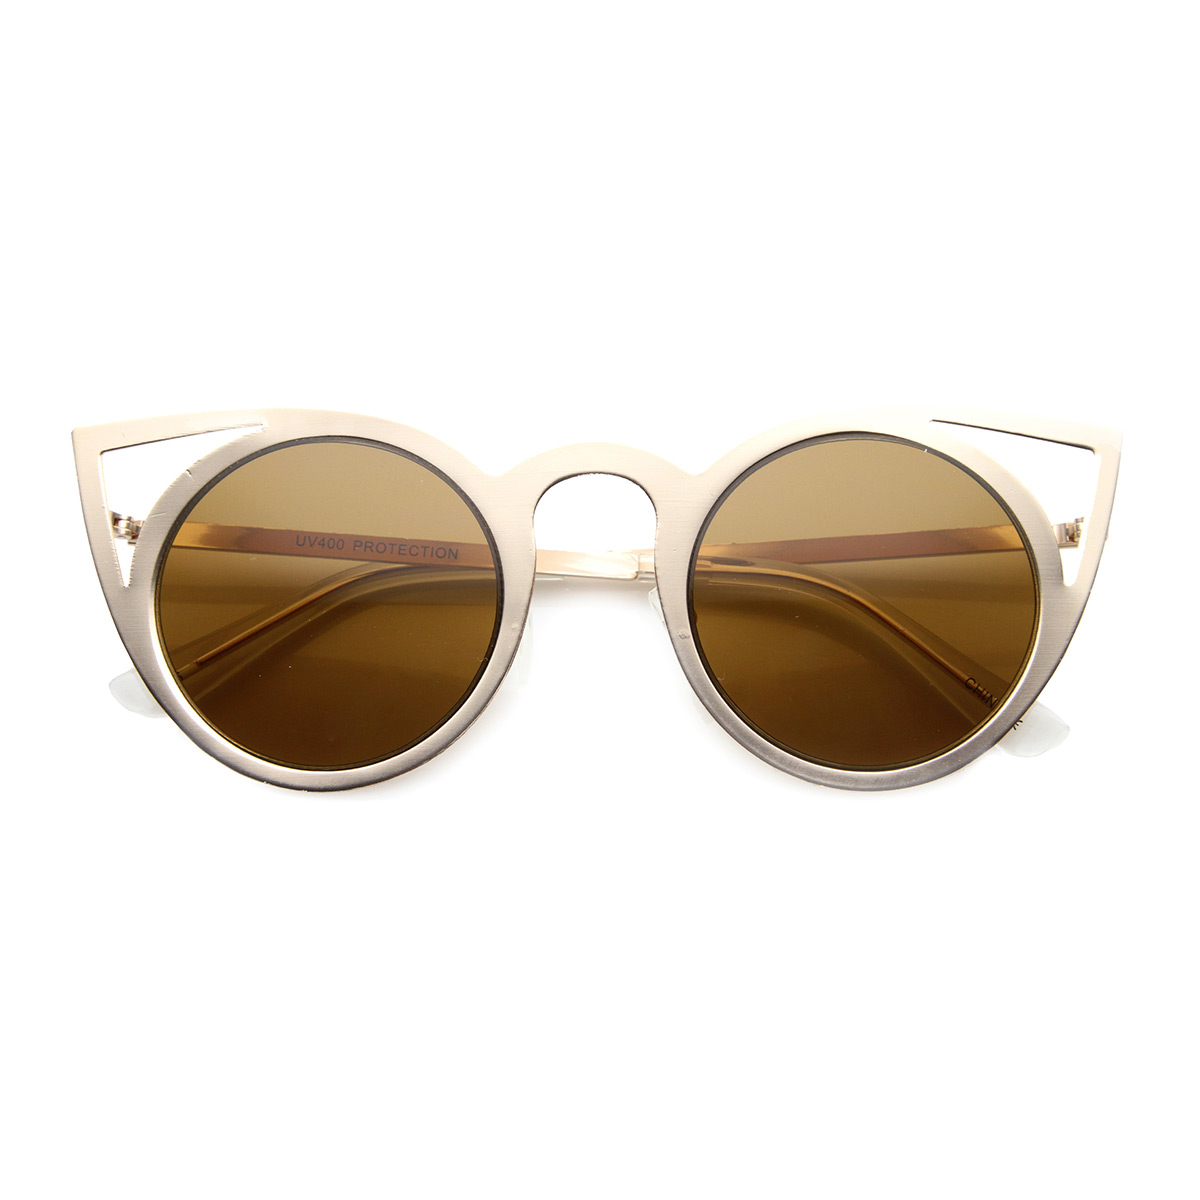 Womens High Fashion Full Round Metal Cut-Out Cat Eye Frame Sunglasses 9788 - Gunmetal / Green